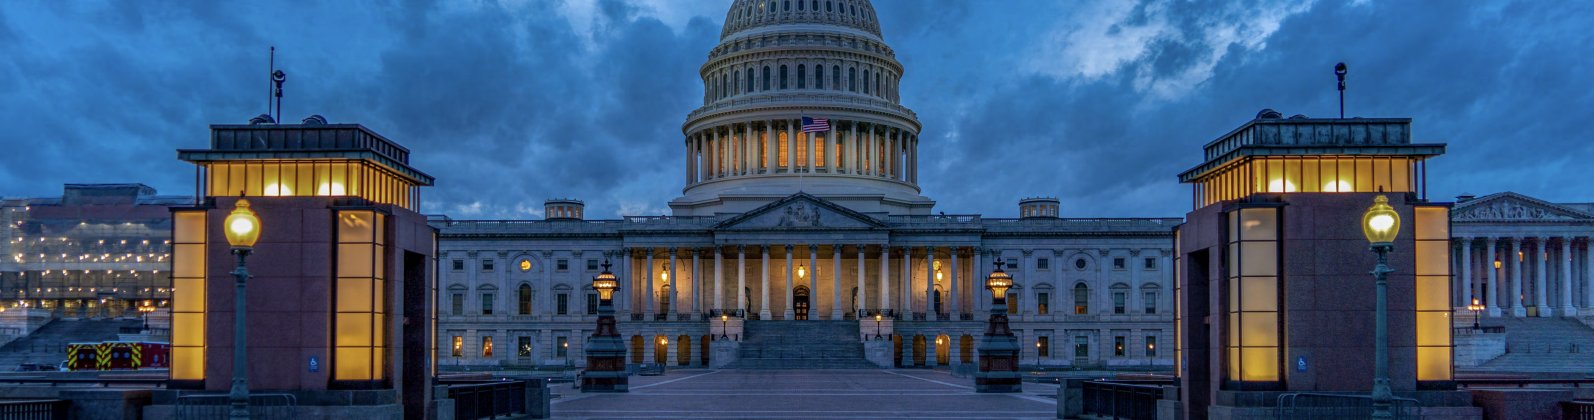 The U.S. Capitol building at sunrise.